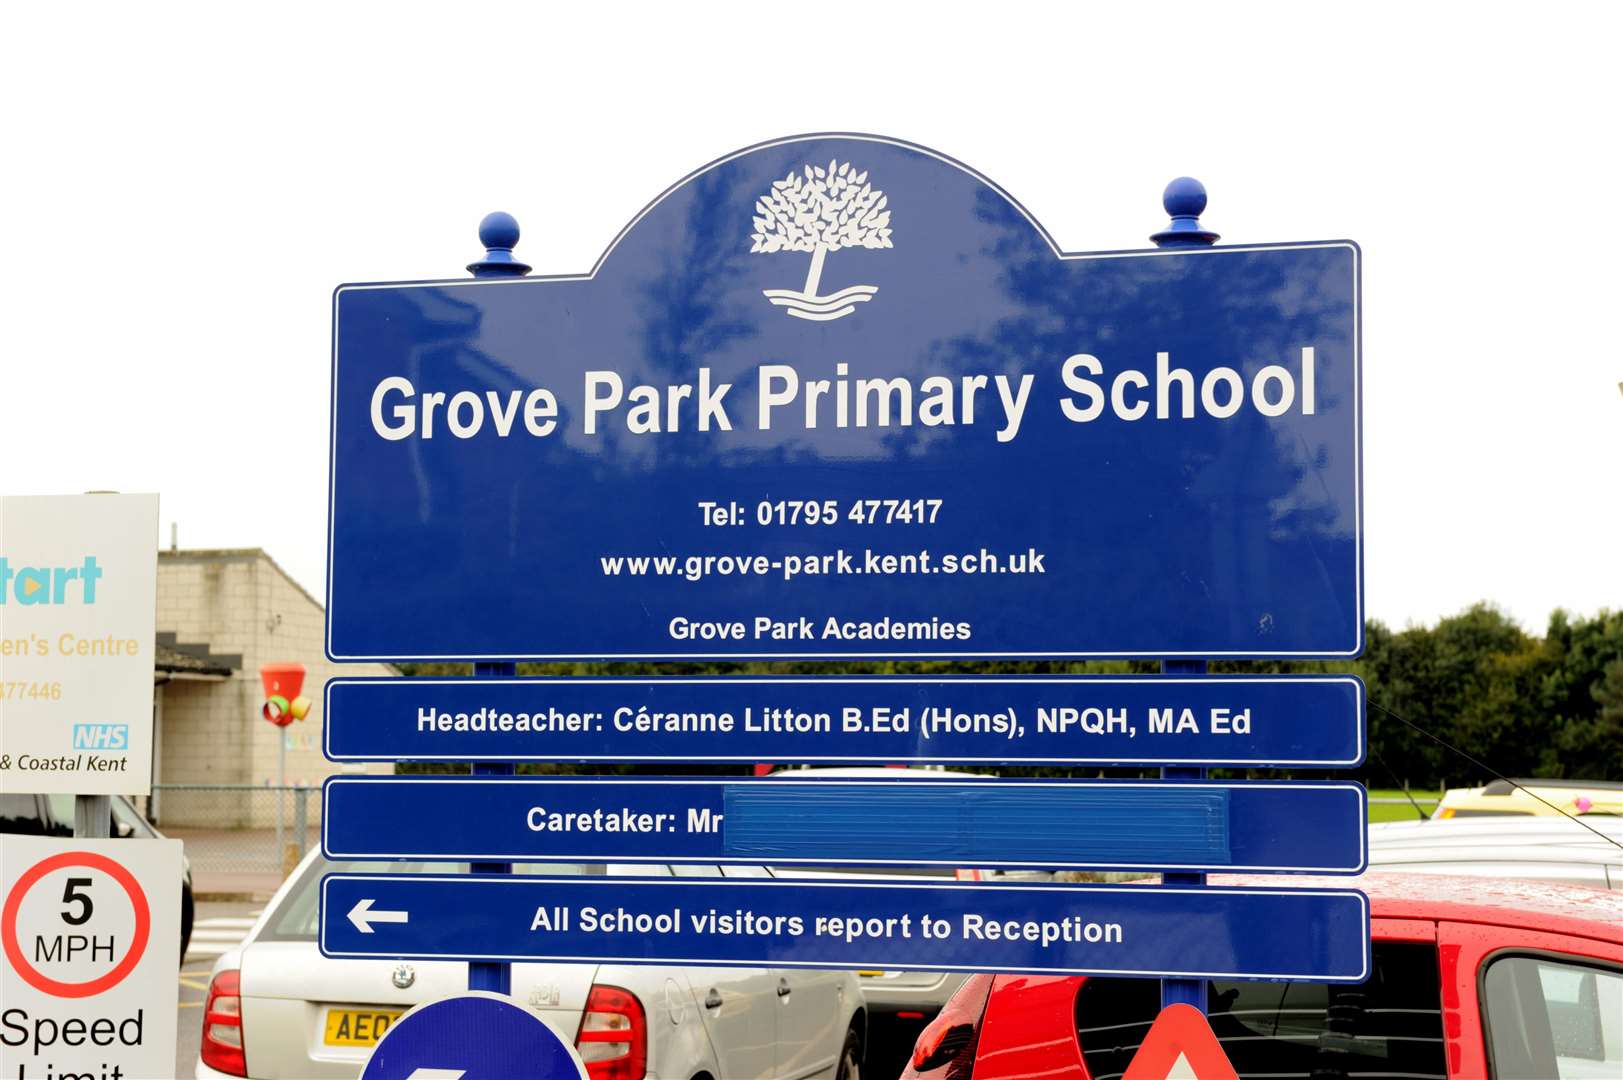 Grove Park Primary School in Hilton Drive, Sittingbourne